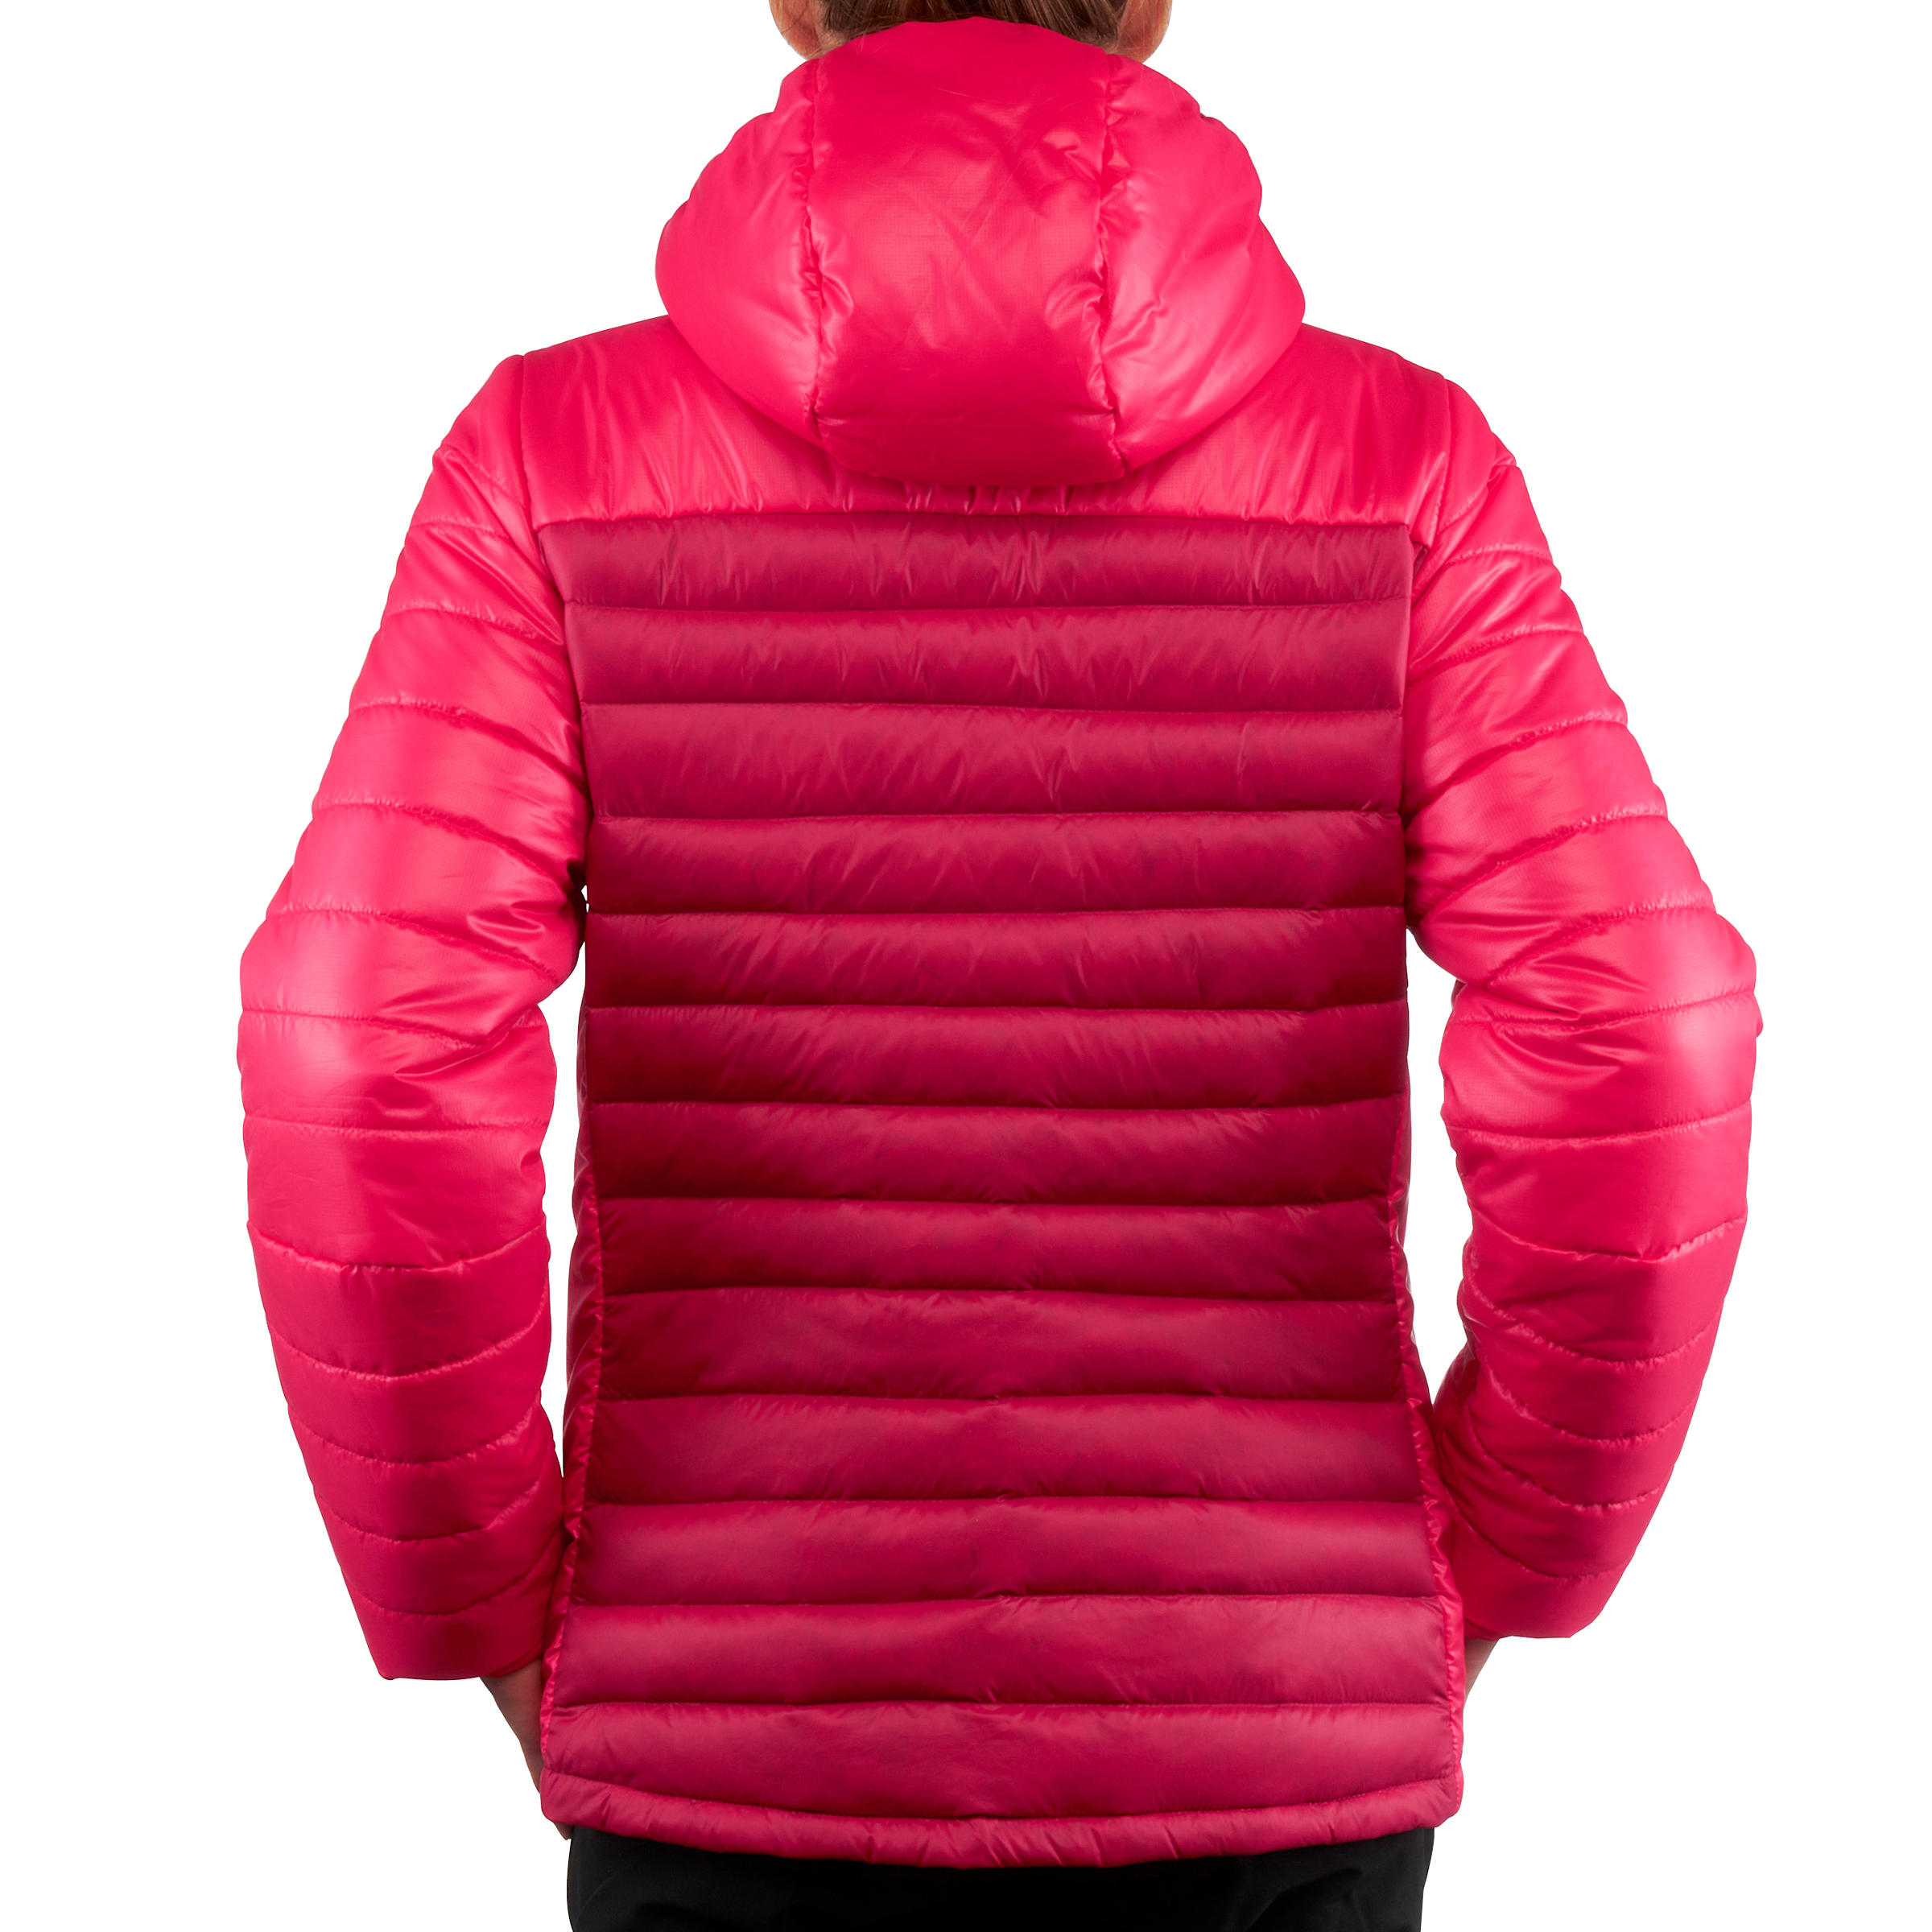 X-Light 1 Woman's Padded Hiking Jacket - Pink 14/17